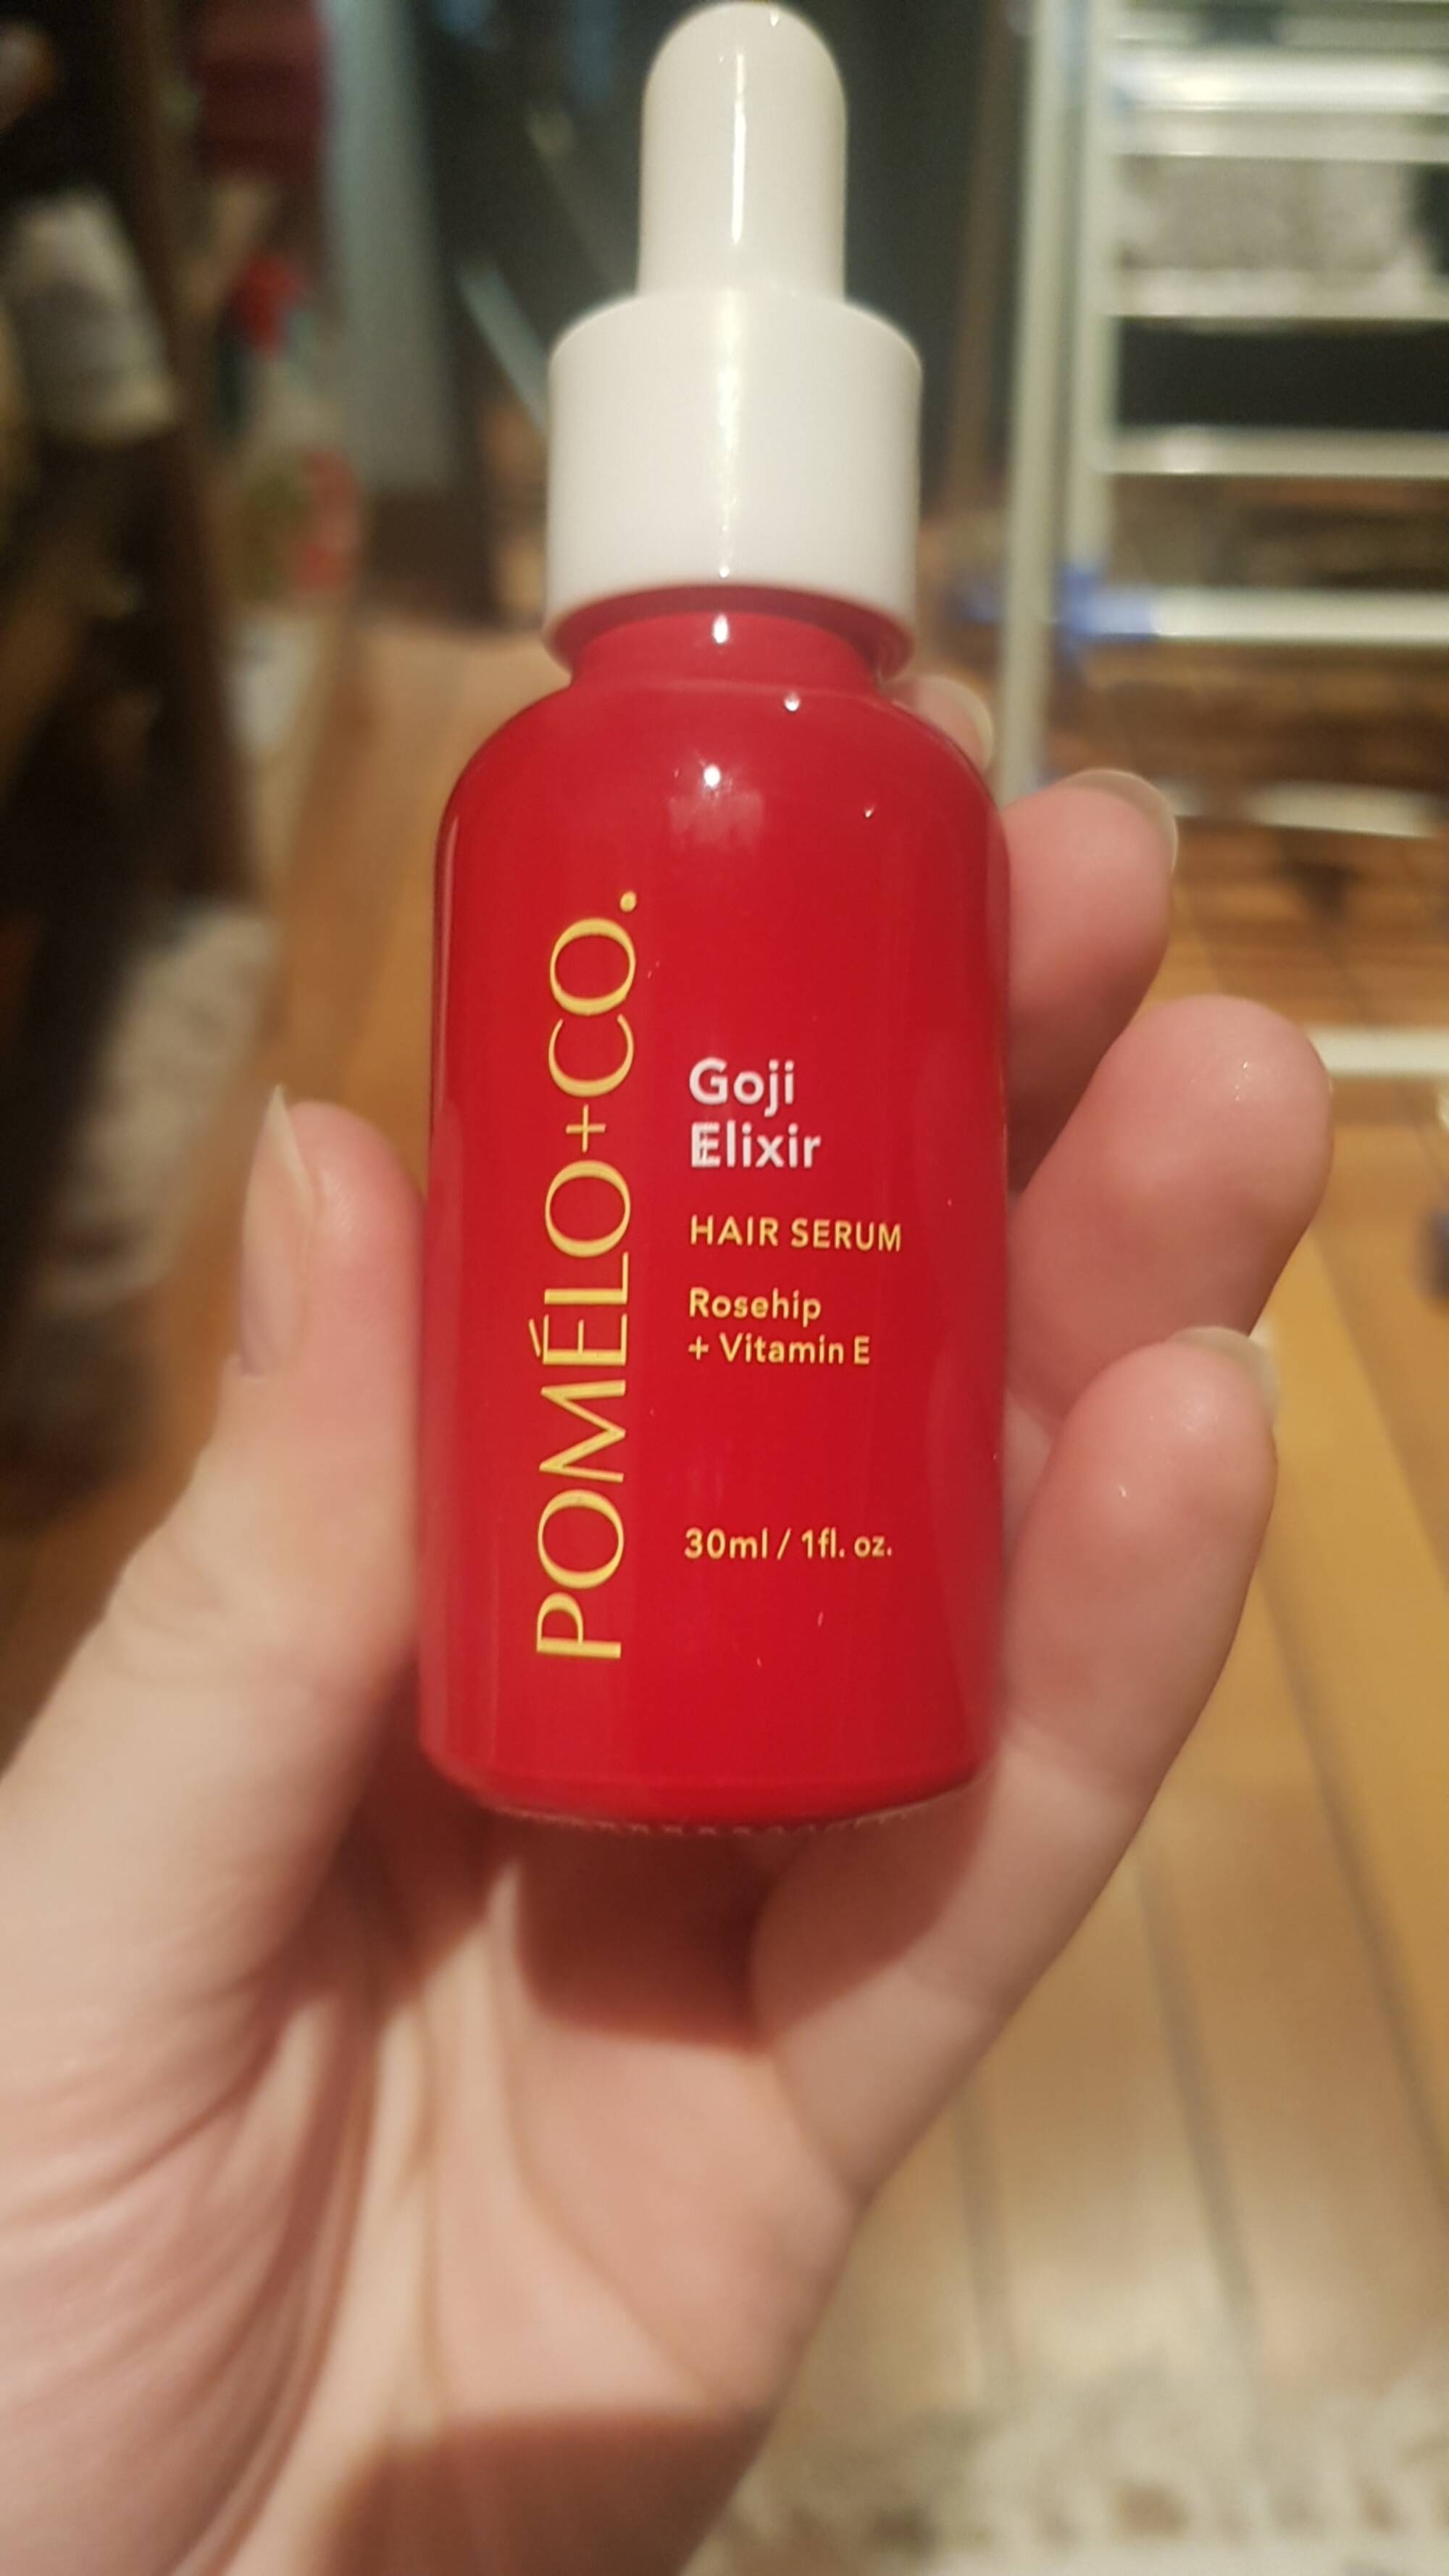 POMELO-CO - Goji elixir - Hair serum